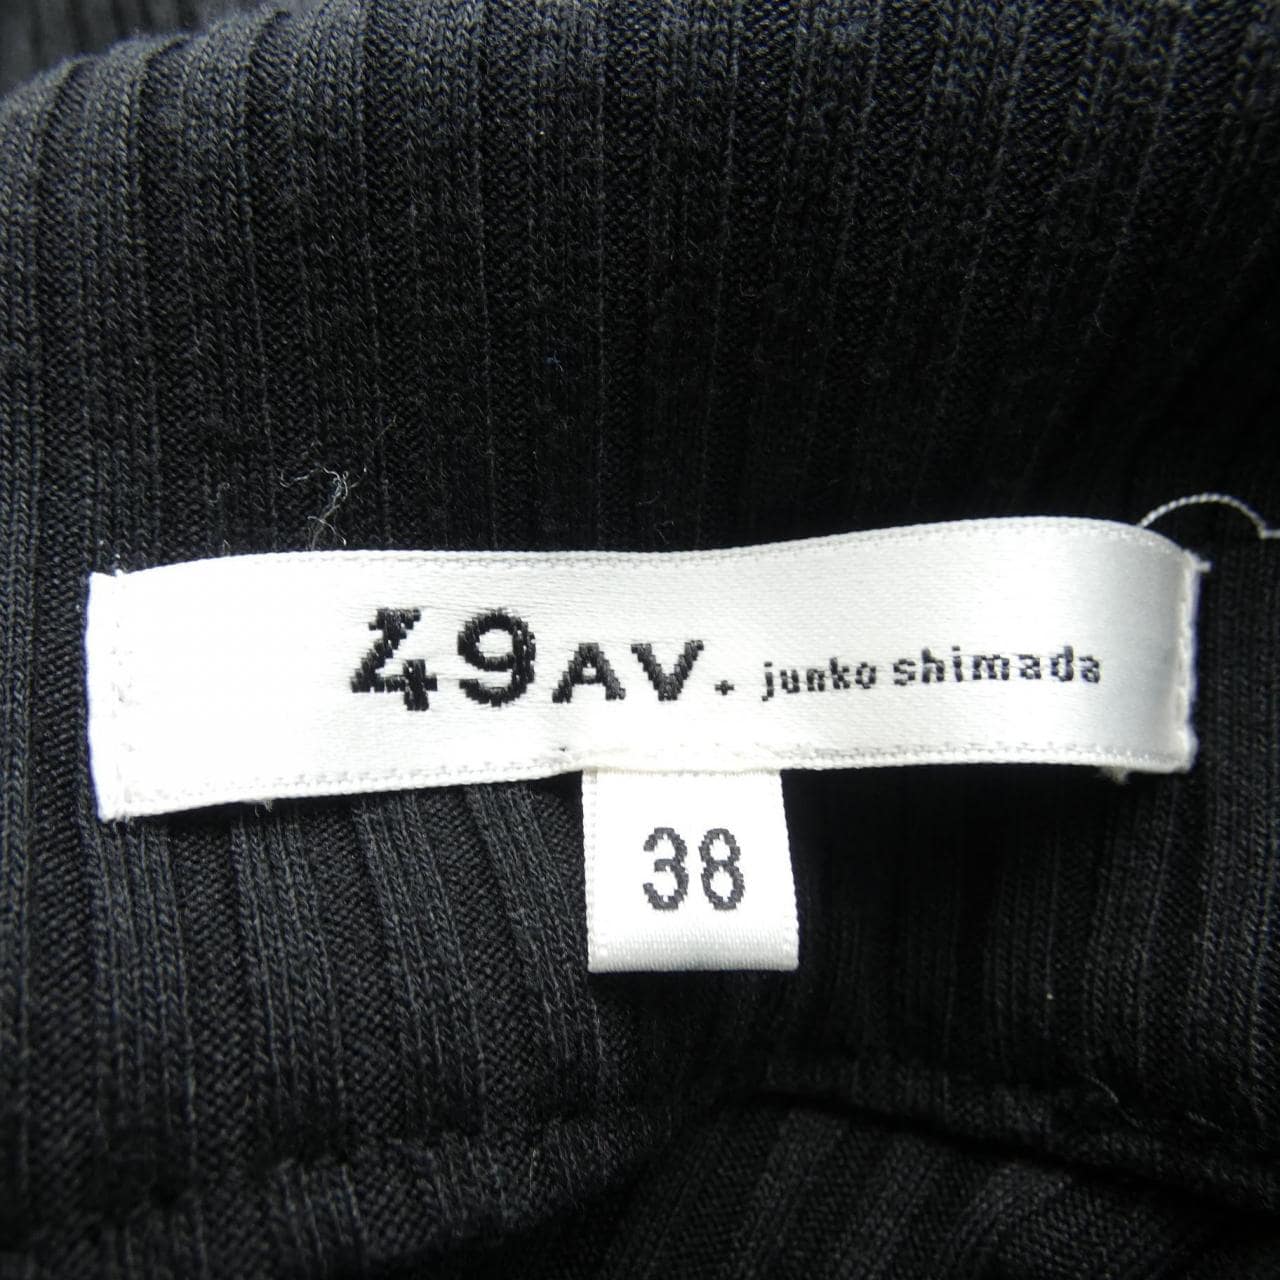 49 Avenue Junko Shimada 49AV.junko shimada knit